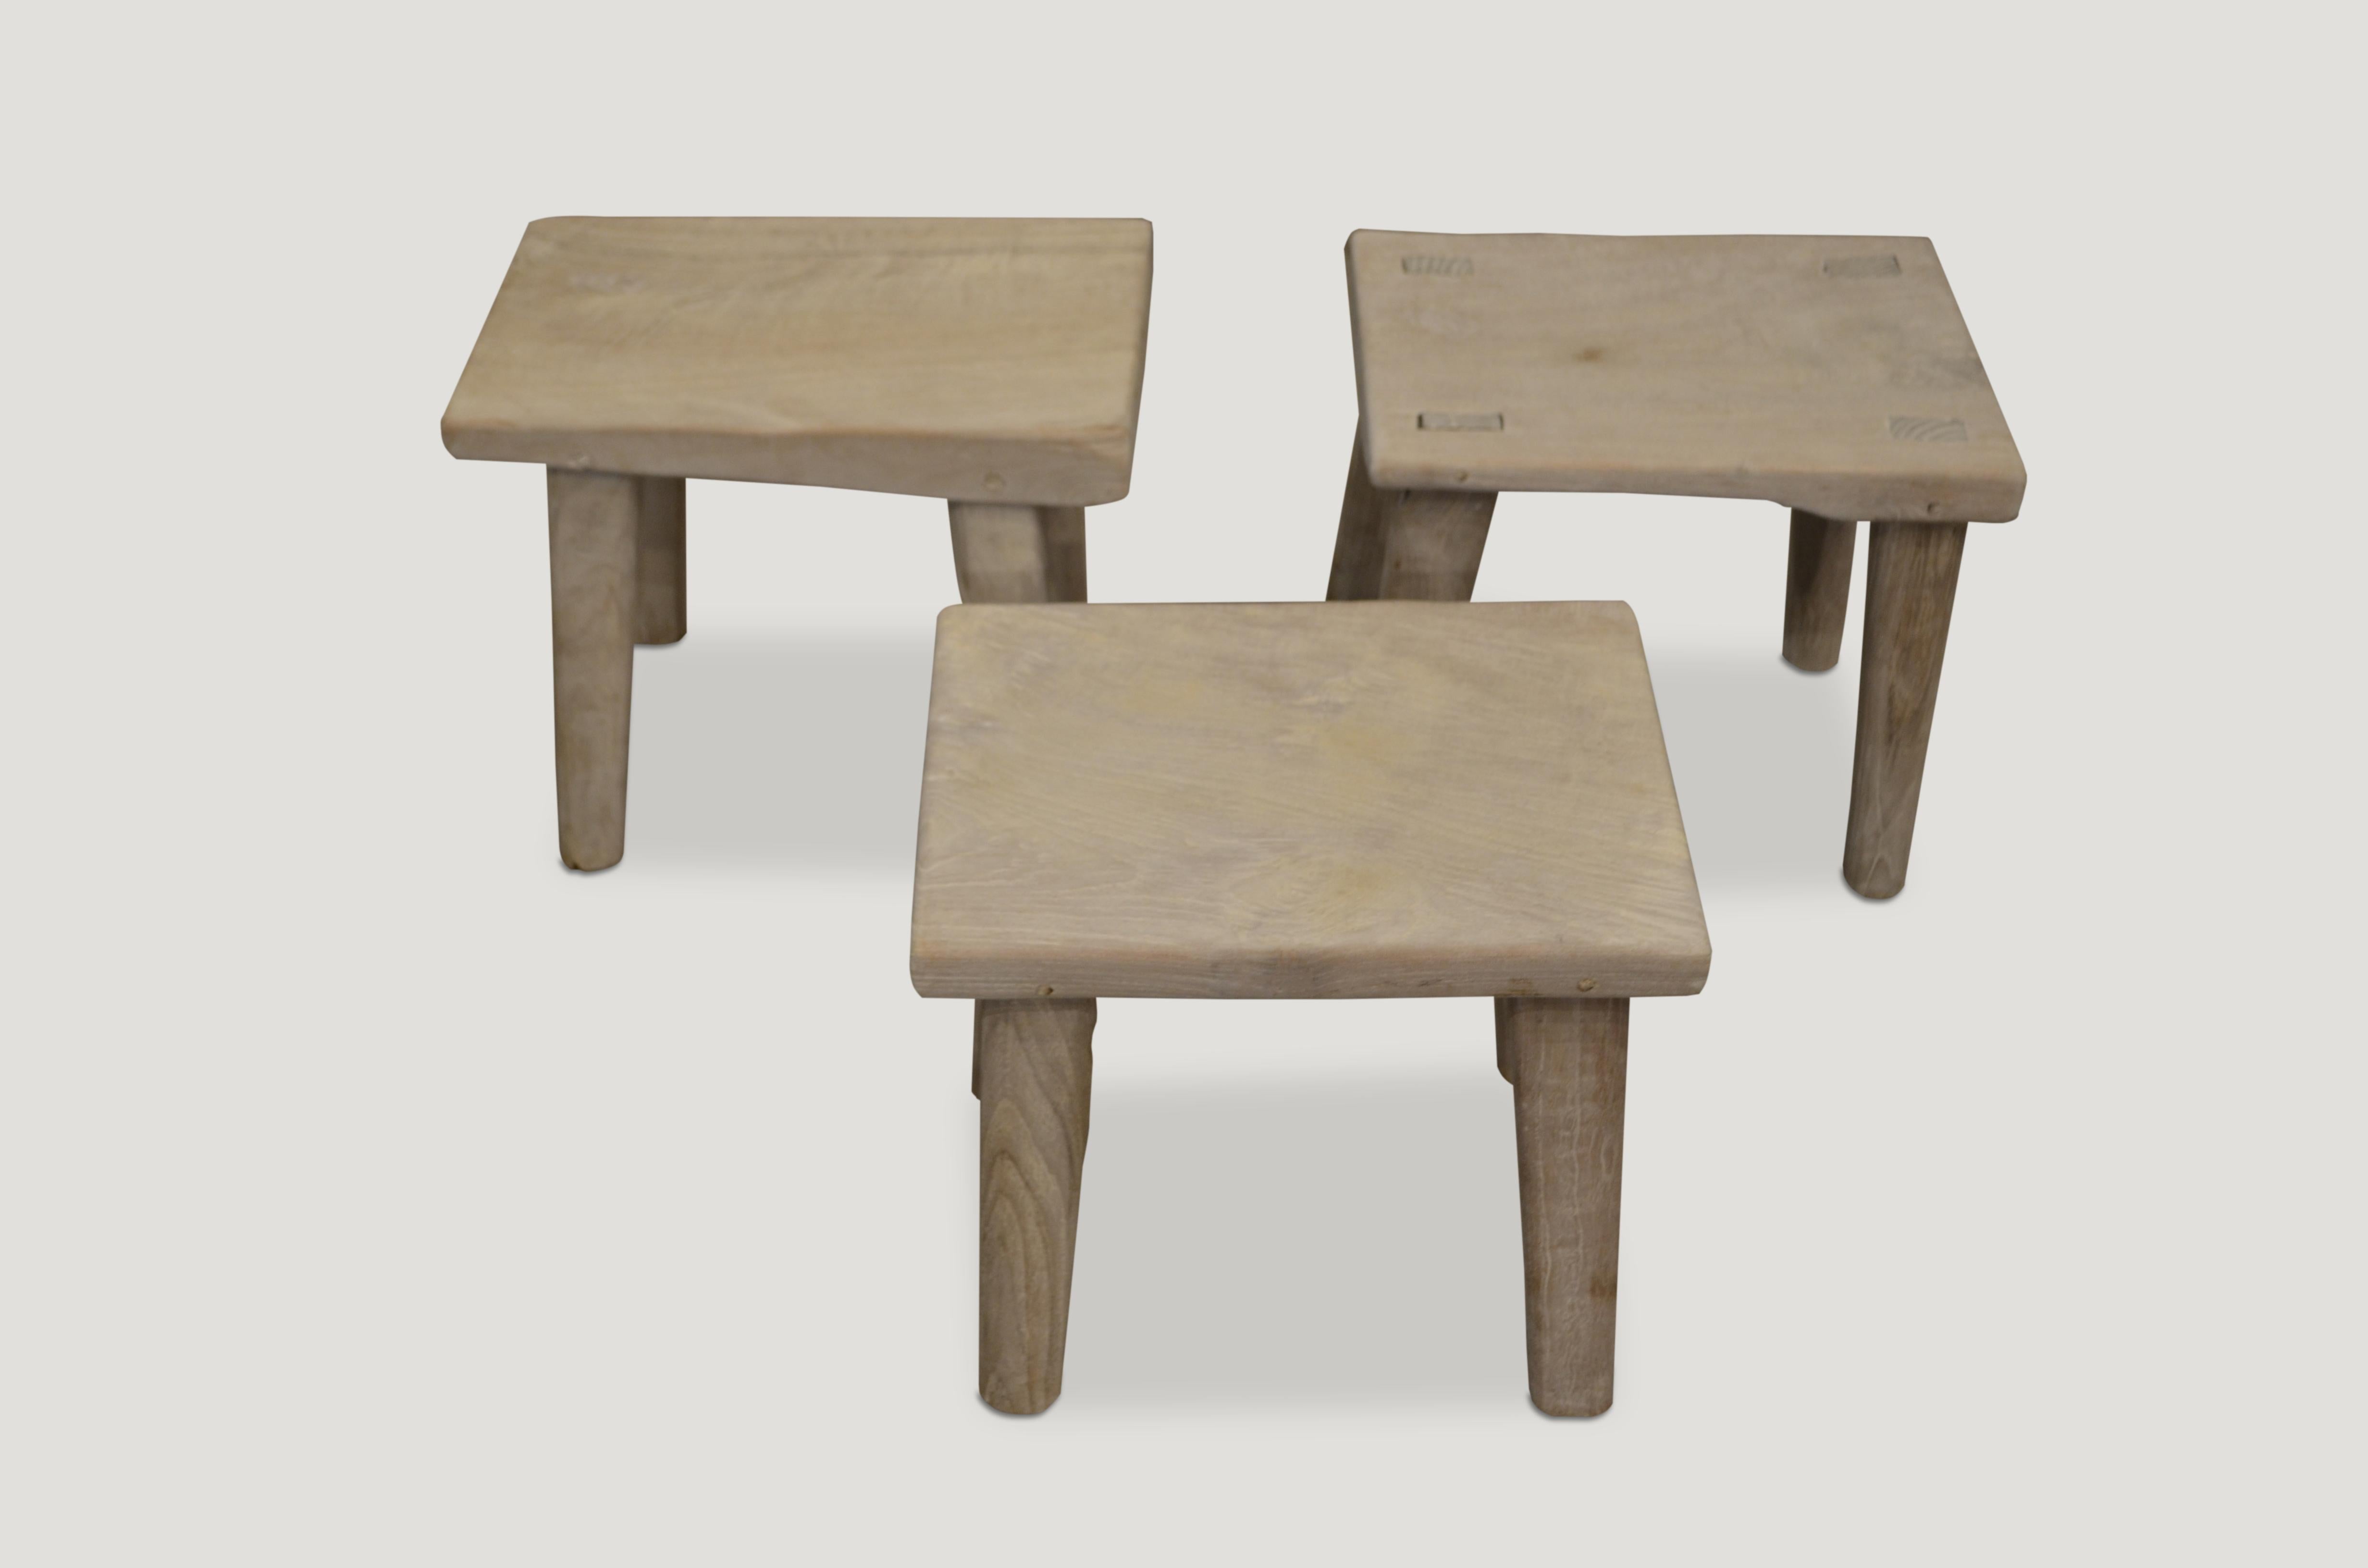 Organic Modern Andrianna Shamaris St. Barts Teak Wood Side Table or Stool